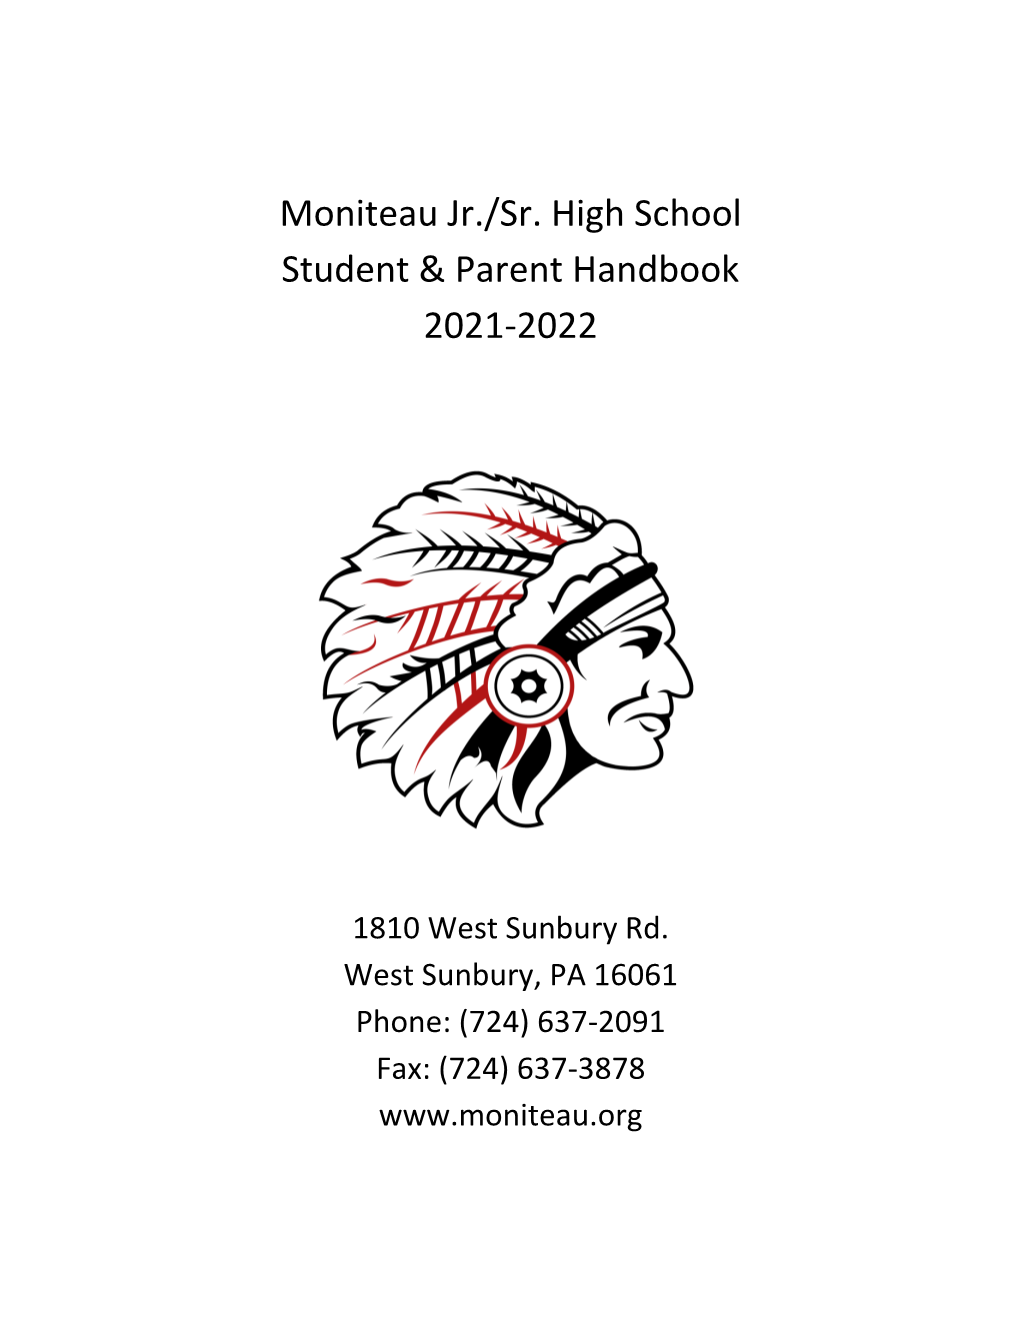 Moniteau Jr./Sr. High School Student & Parent Handbook 2021-2022